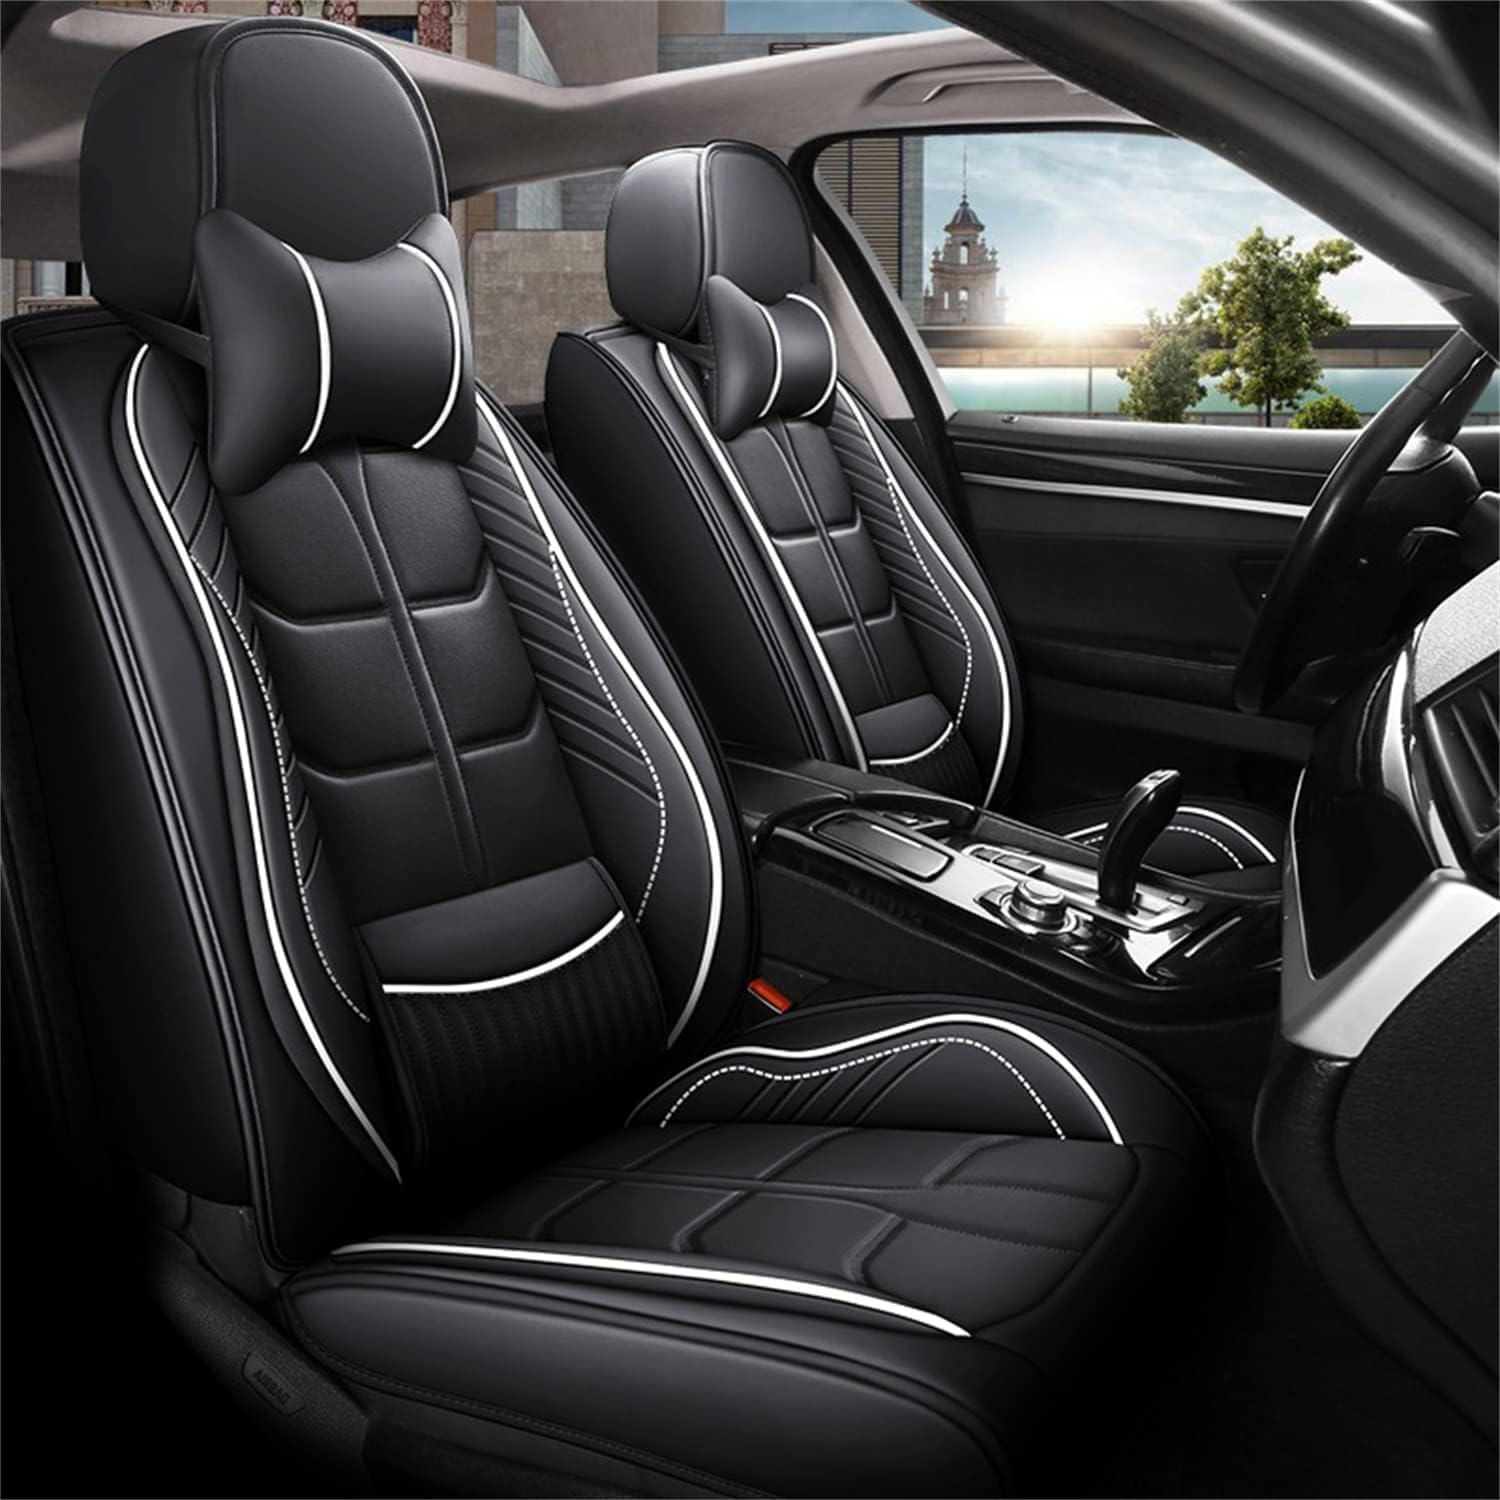 NPORT Auto PU-Leder Sitzbezüge Sets für Hyundai ix25 Second Generation (SU2) 2020-present, Komfortabler Dauerhafter Sitzbezug Vordersitze Rücksitze Autositzschoner,A/Blackwhite-Nopillow von NPORT